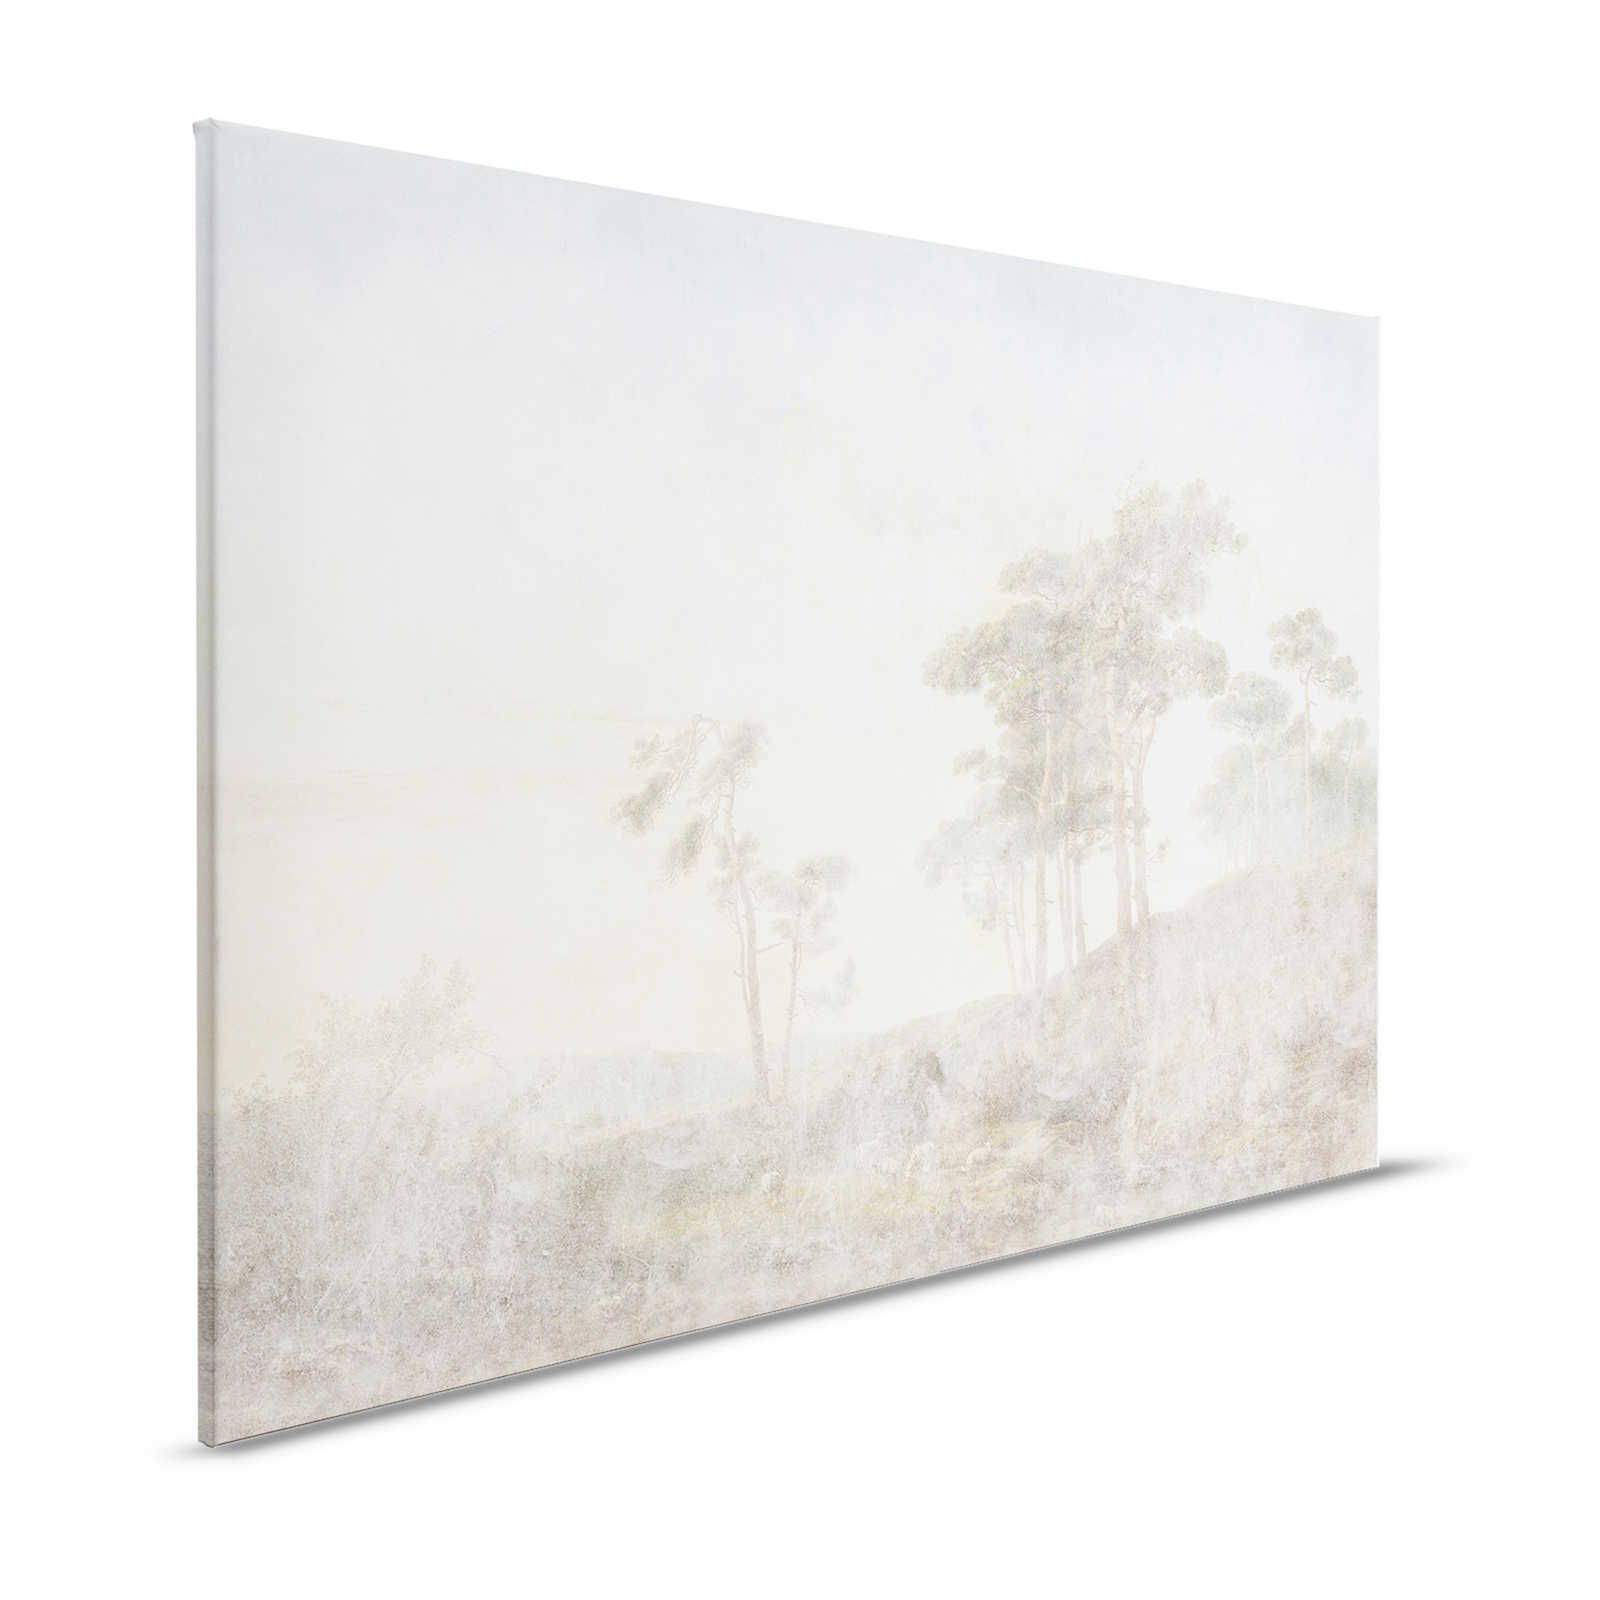 Romantic Grove 1 - Gemälde Leinwandbild verblasster Used Look – 1,20 m x 0,80 m
